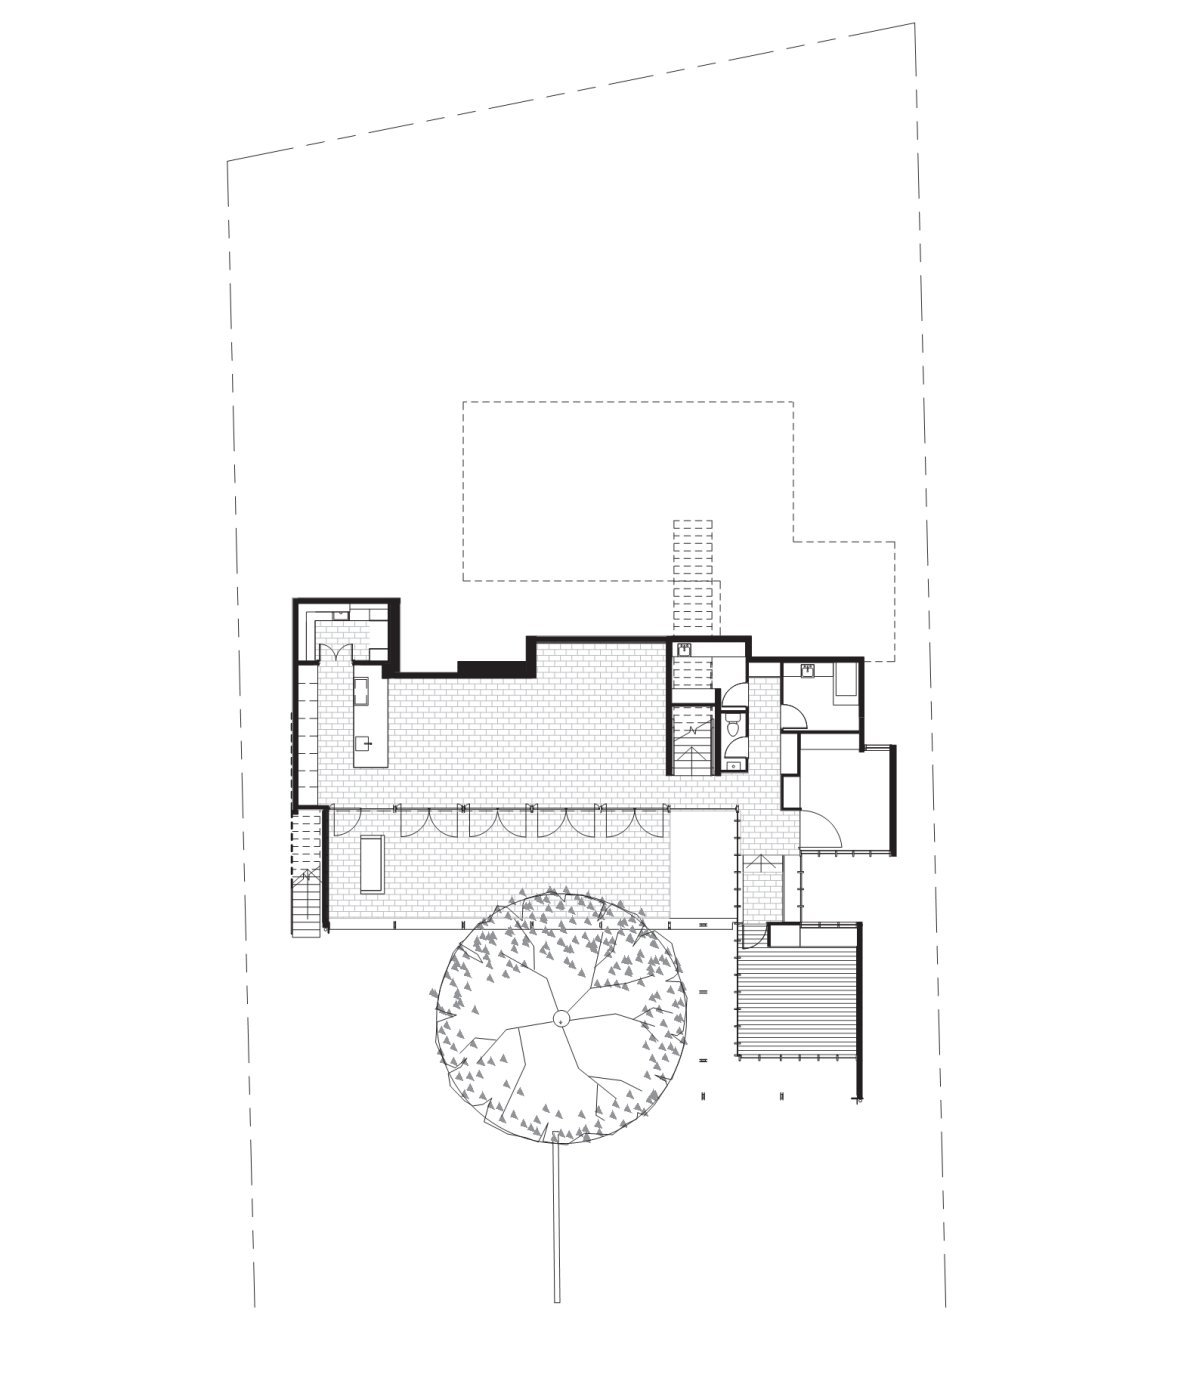 First Floor Plan, Taringa House in Brisbane, Australia